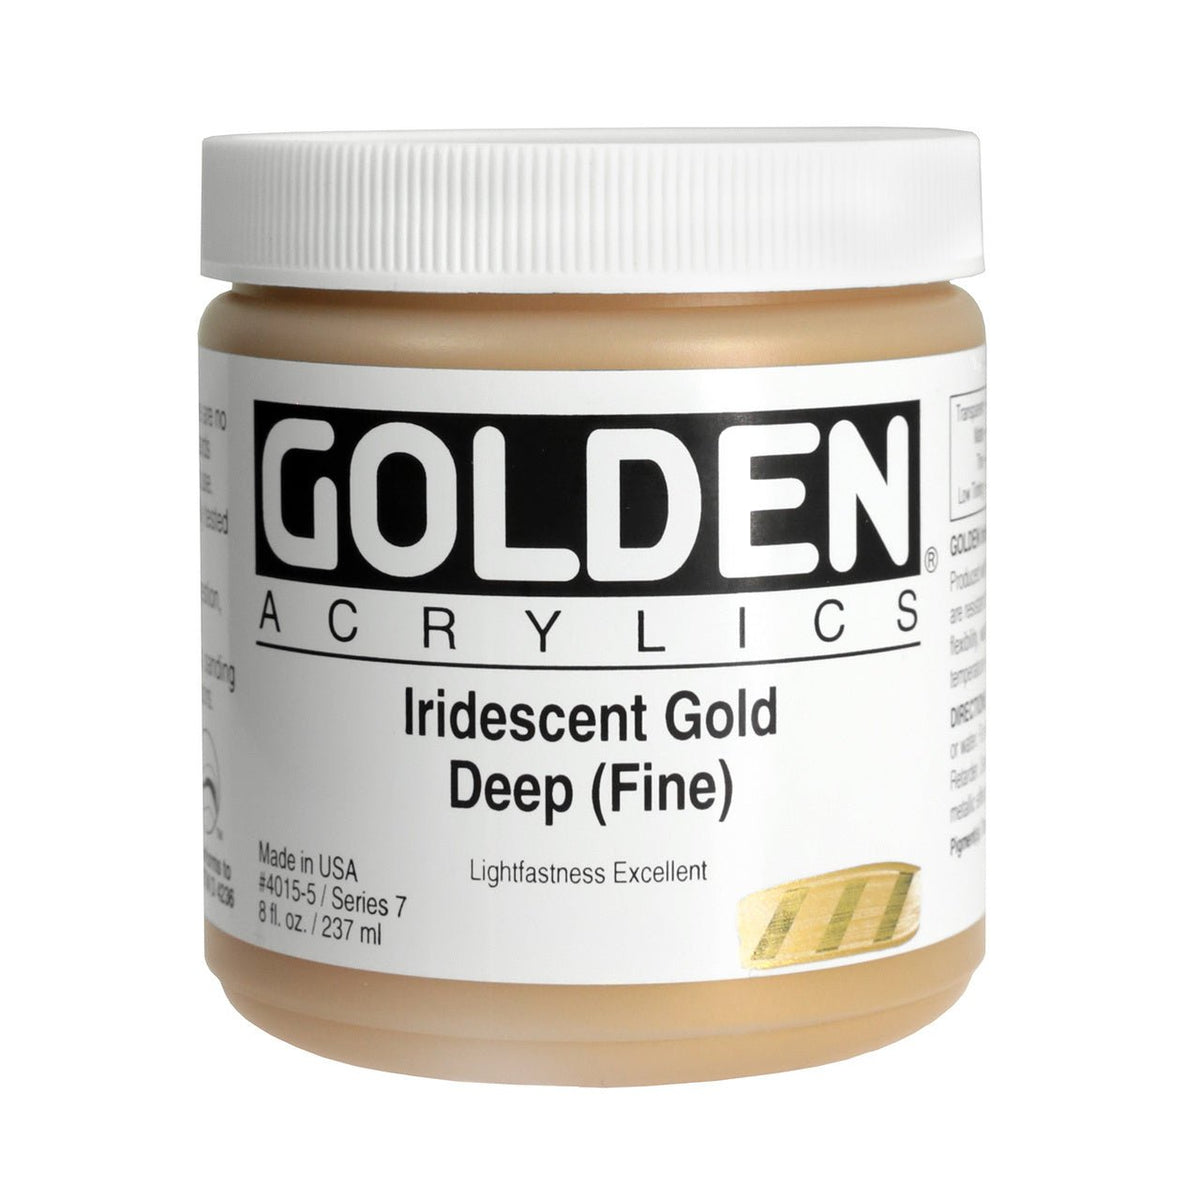 Golden Heavy Body Acrylic Iridescent Gold (Fine) 8 oz